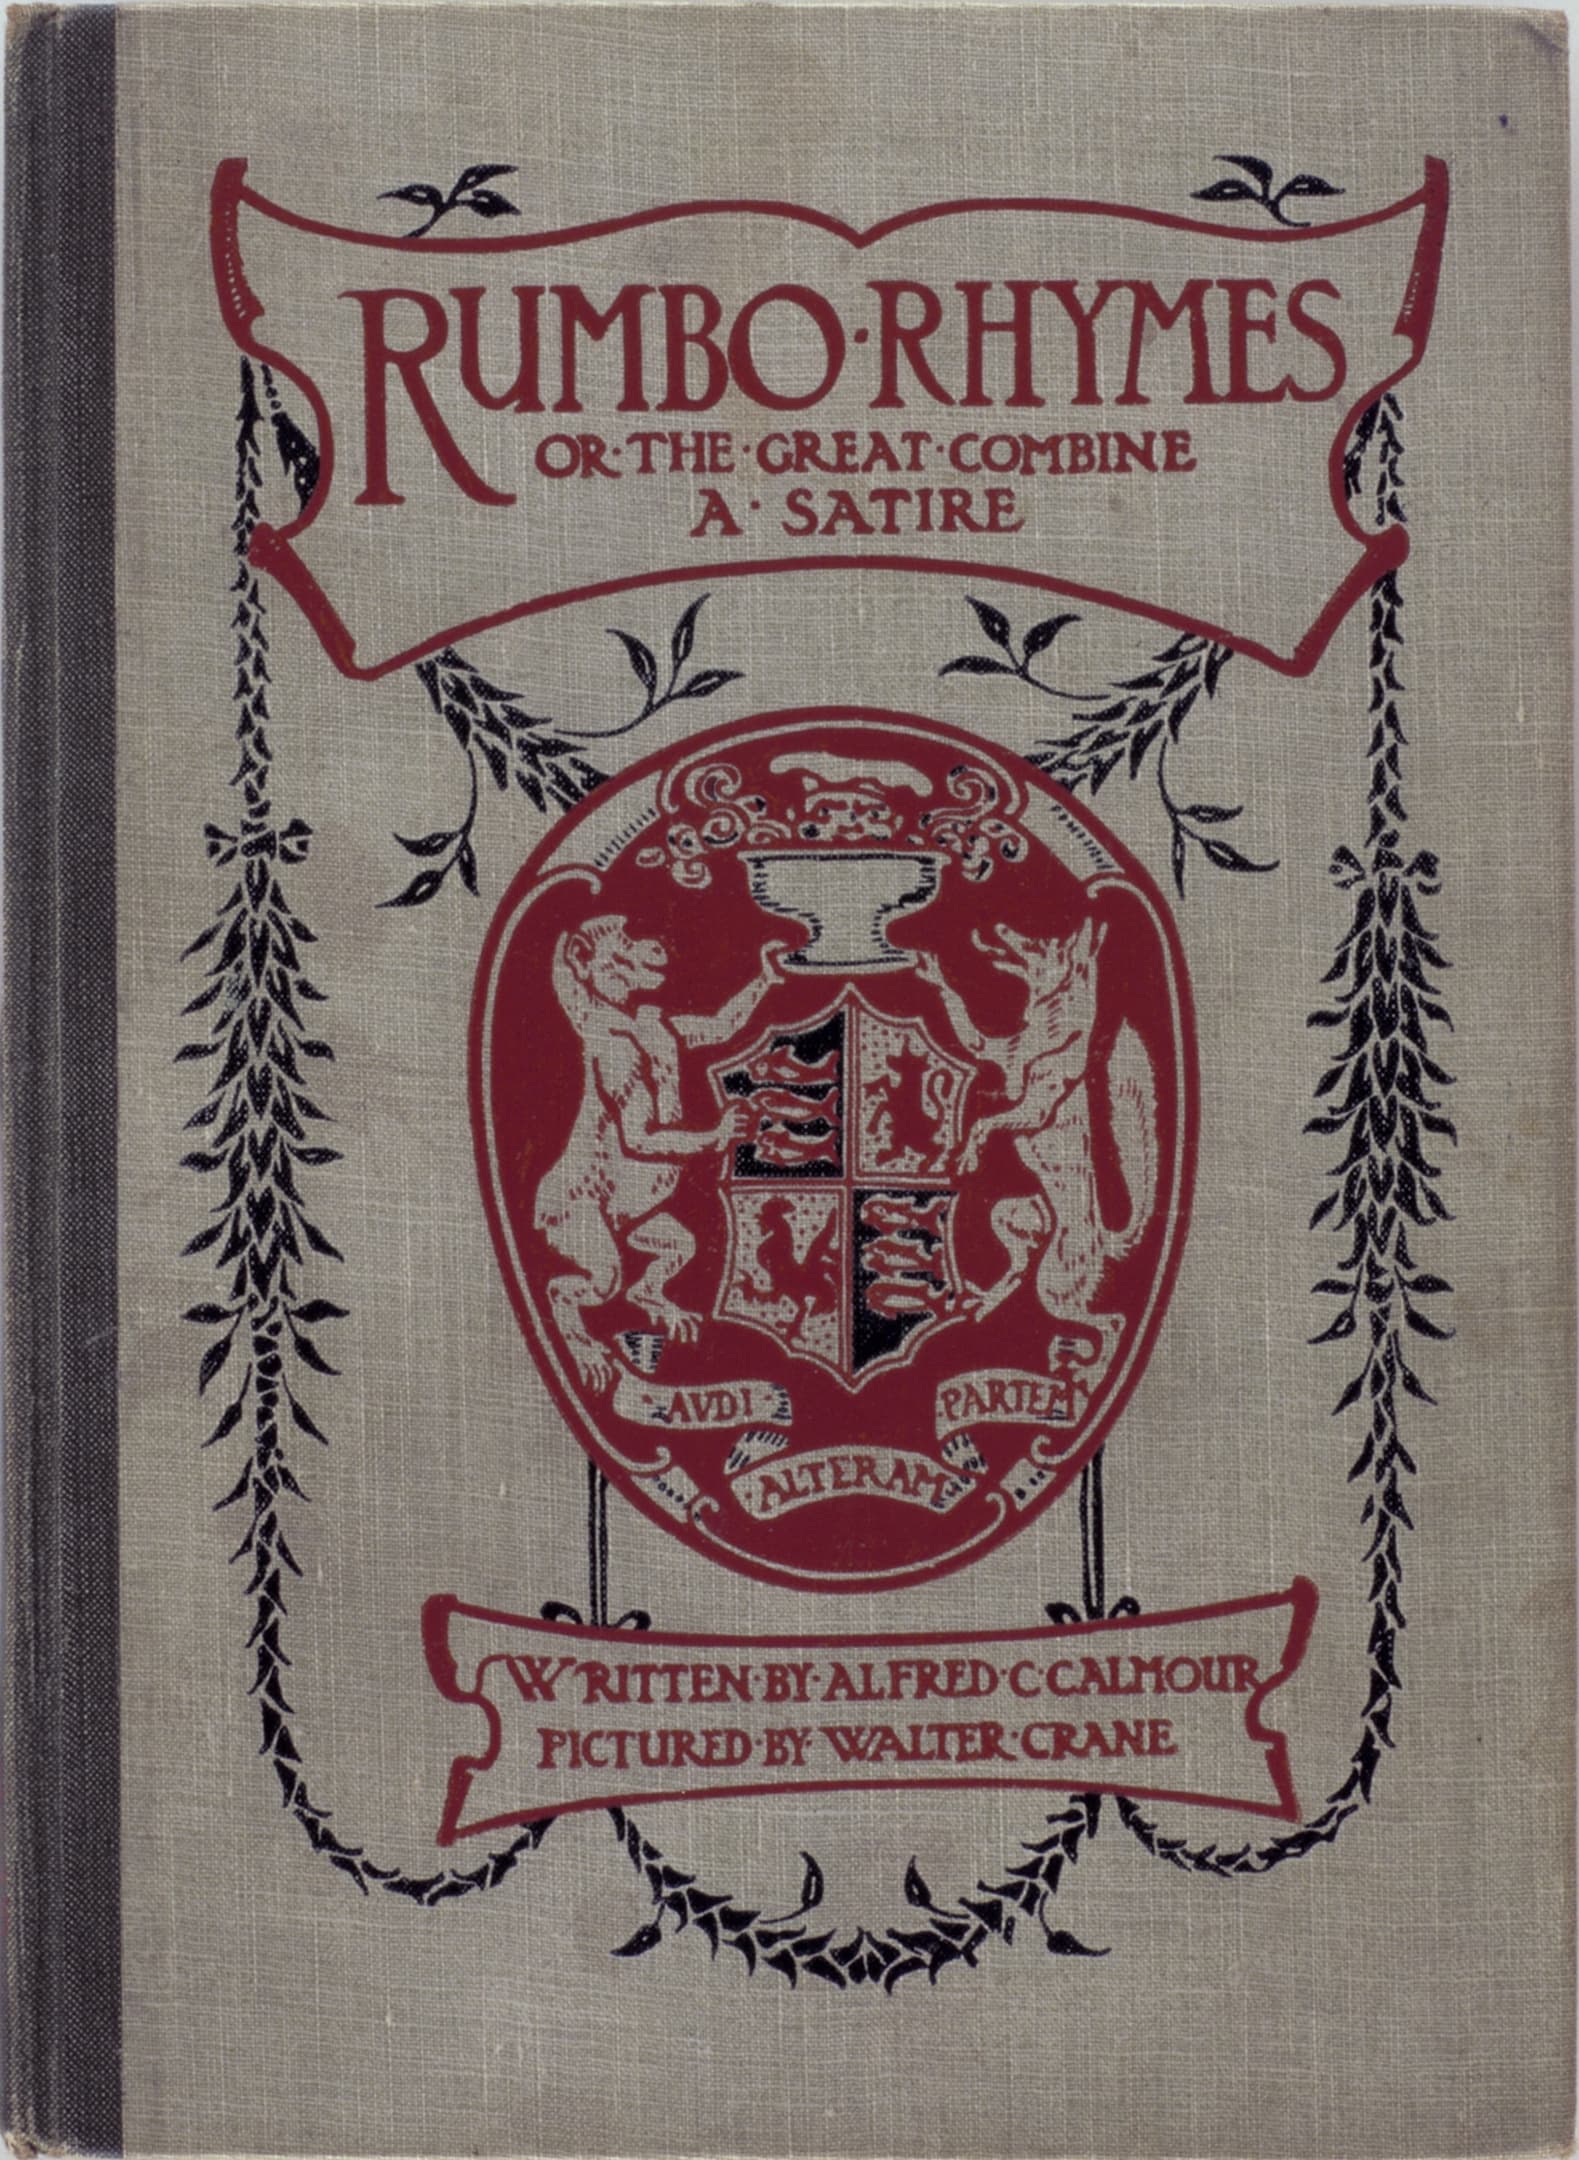 Cover of “Rumbo Rhymes”